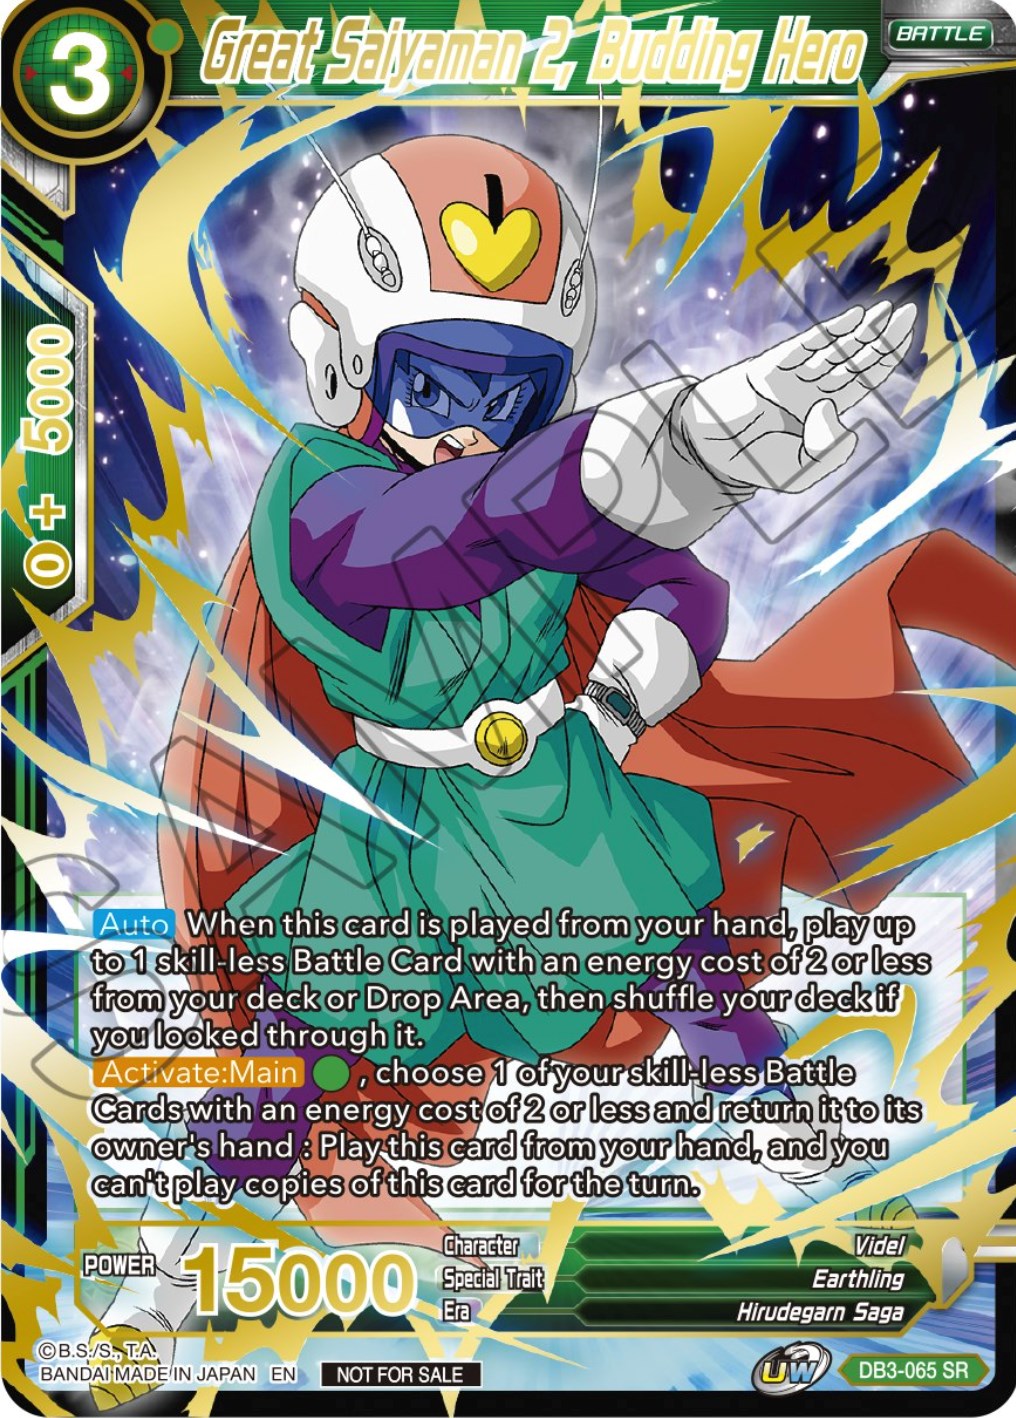 Great Saiyaman 2, Budding Hero (DB3-065) [Tournament Promotion Cards] | Sanctuary Gaming